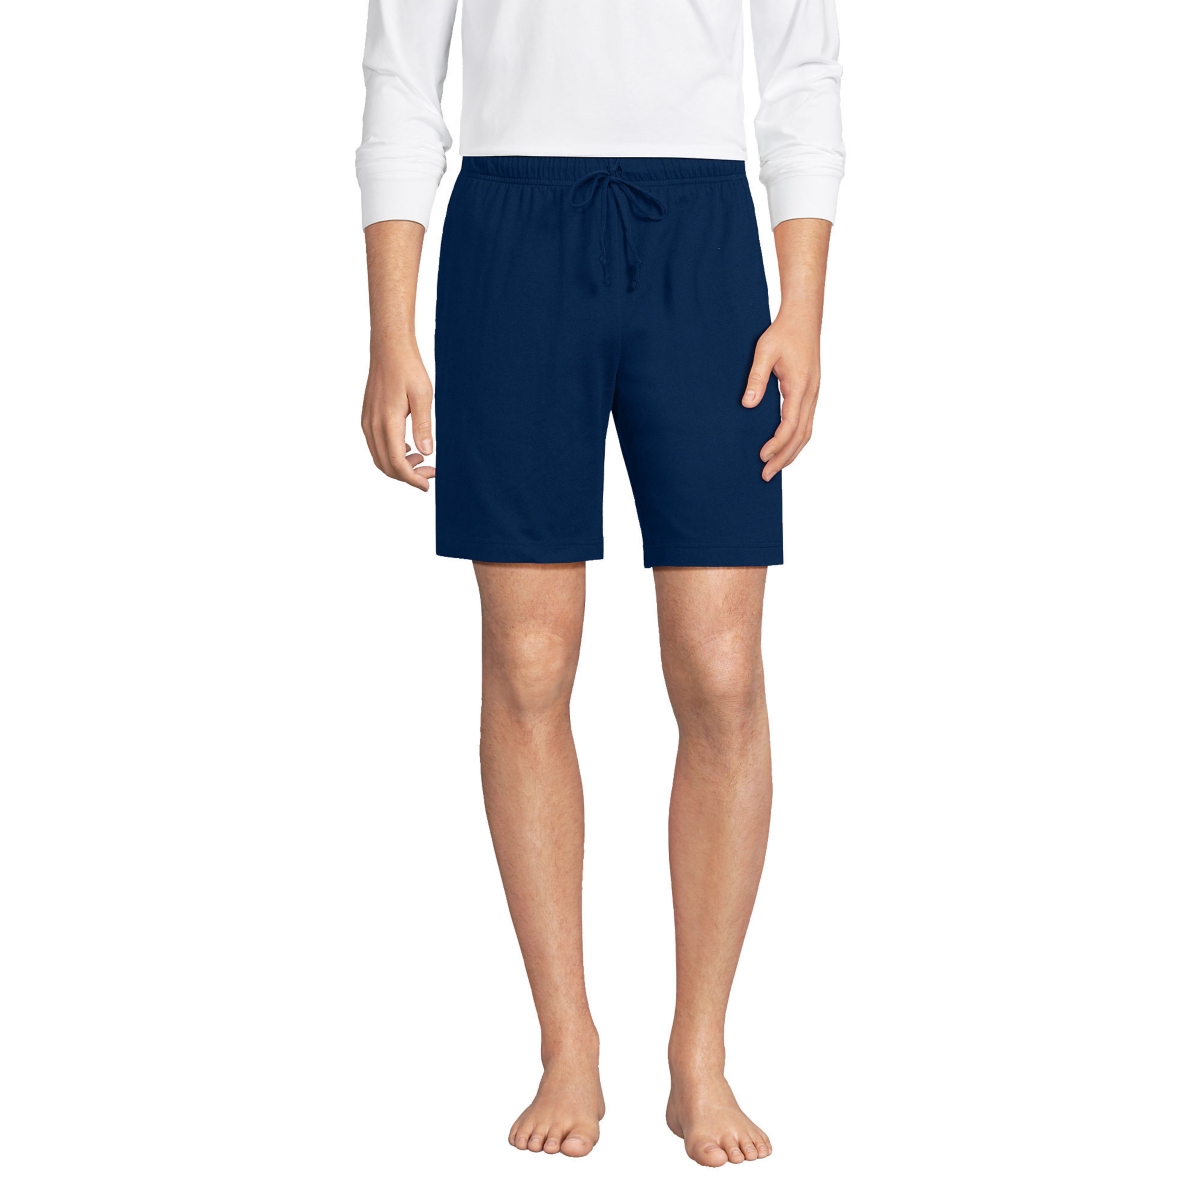 Men's Knit Jersey Pajama Shorts - Deep sea navy